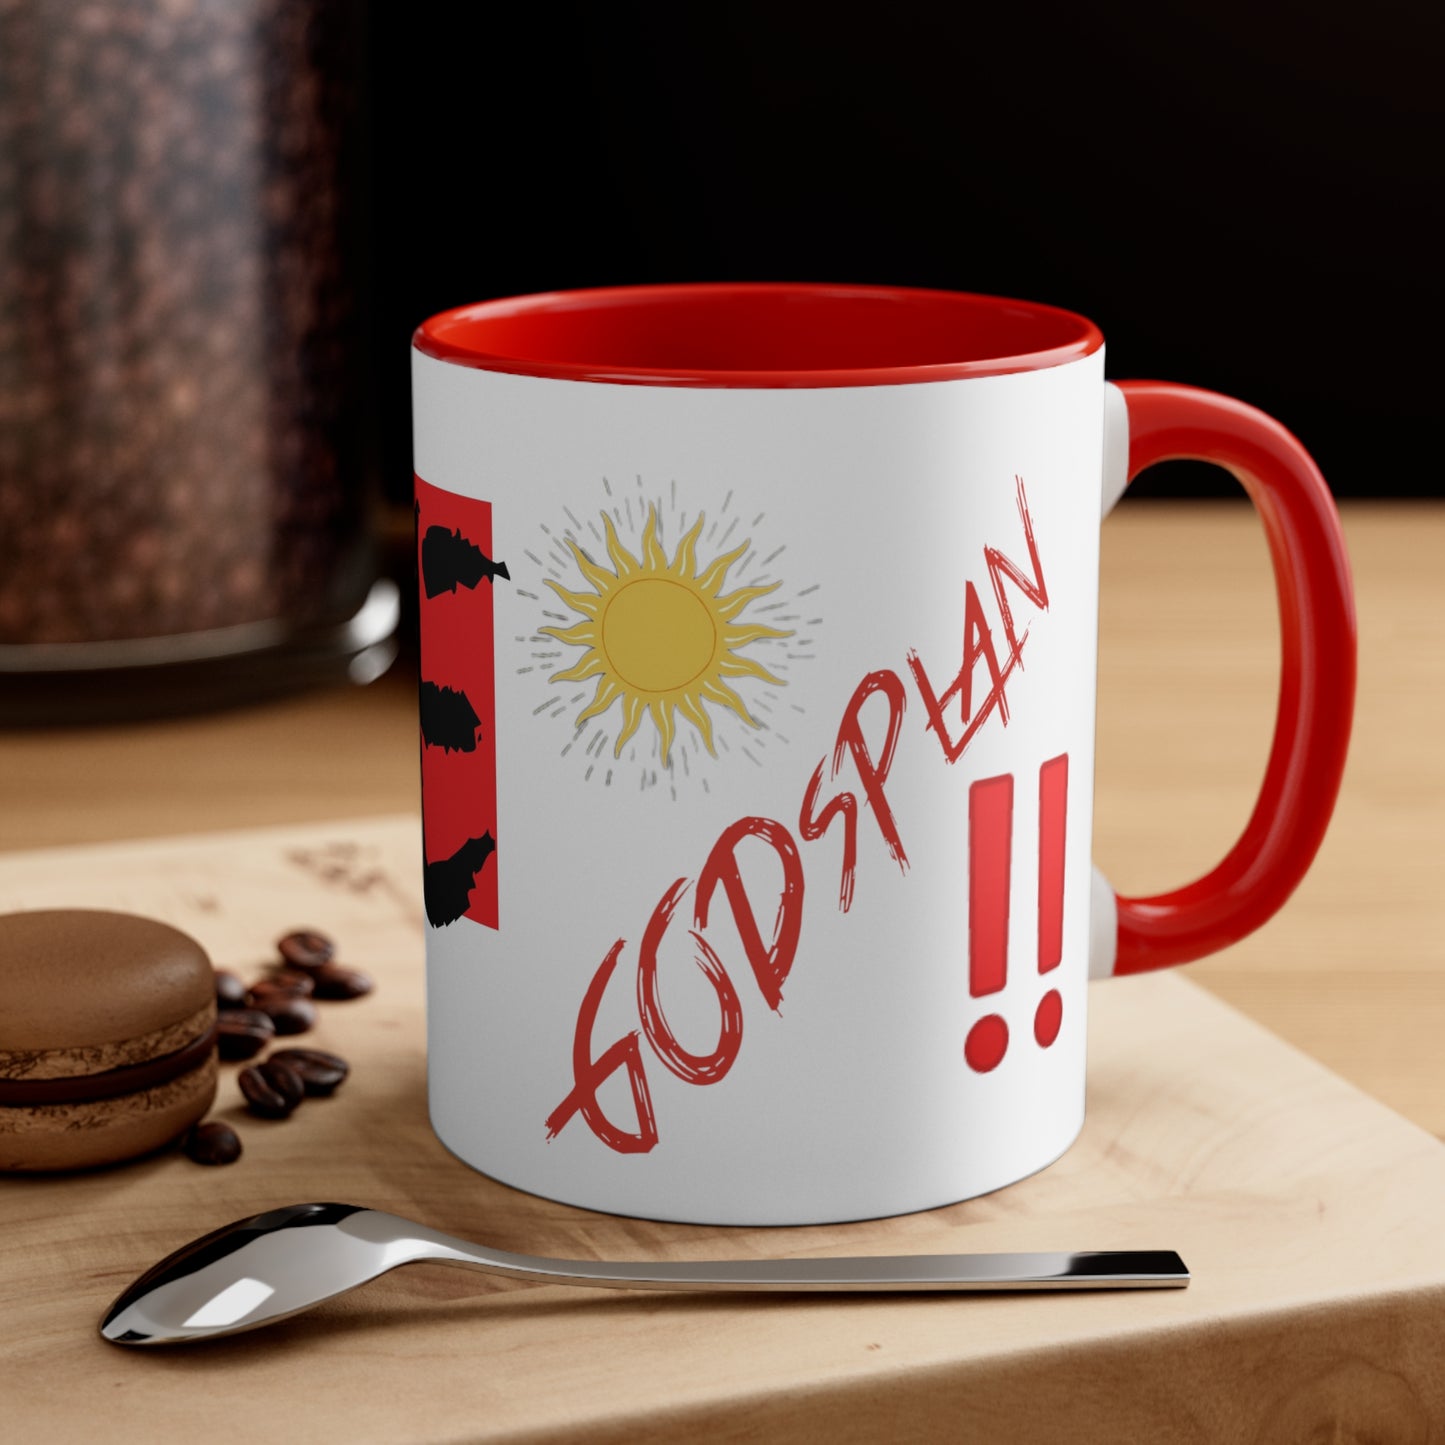 "Good Morning" -Sean Breed- L❤️VE coffee Mug, 11oz